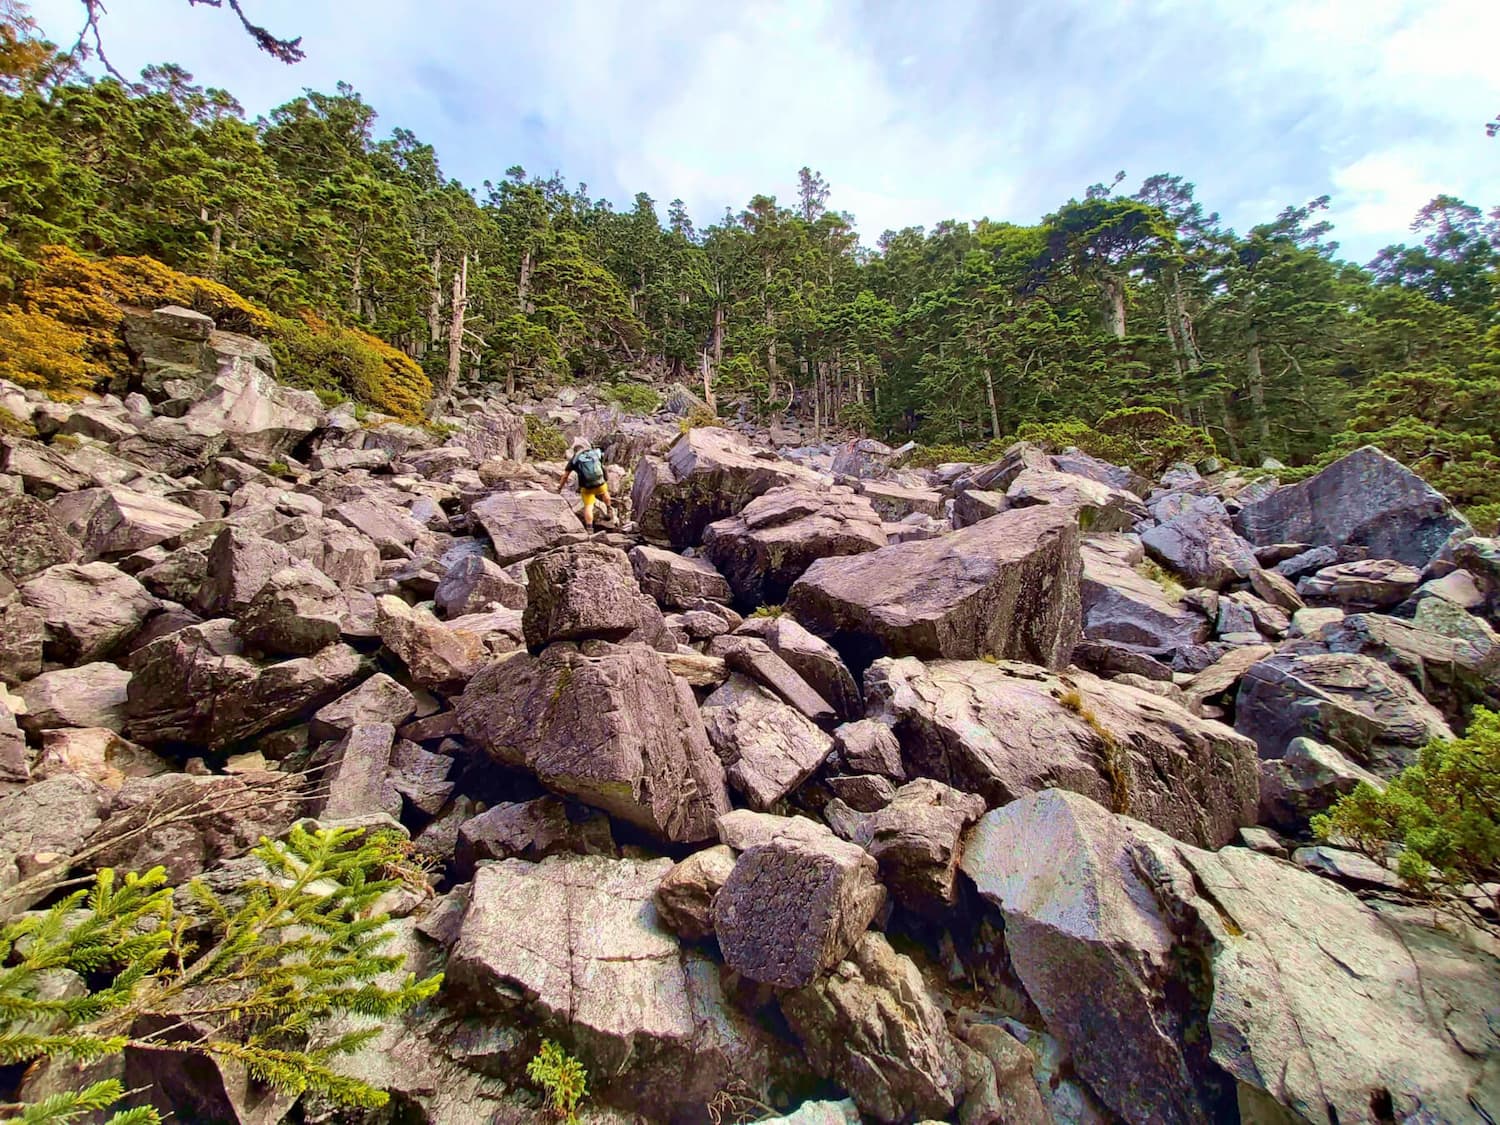 Rubble rock slope before reaching Mt. Baigu